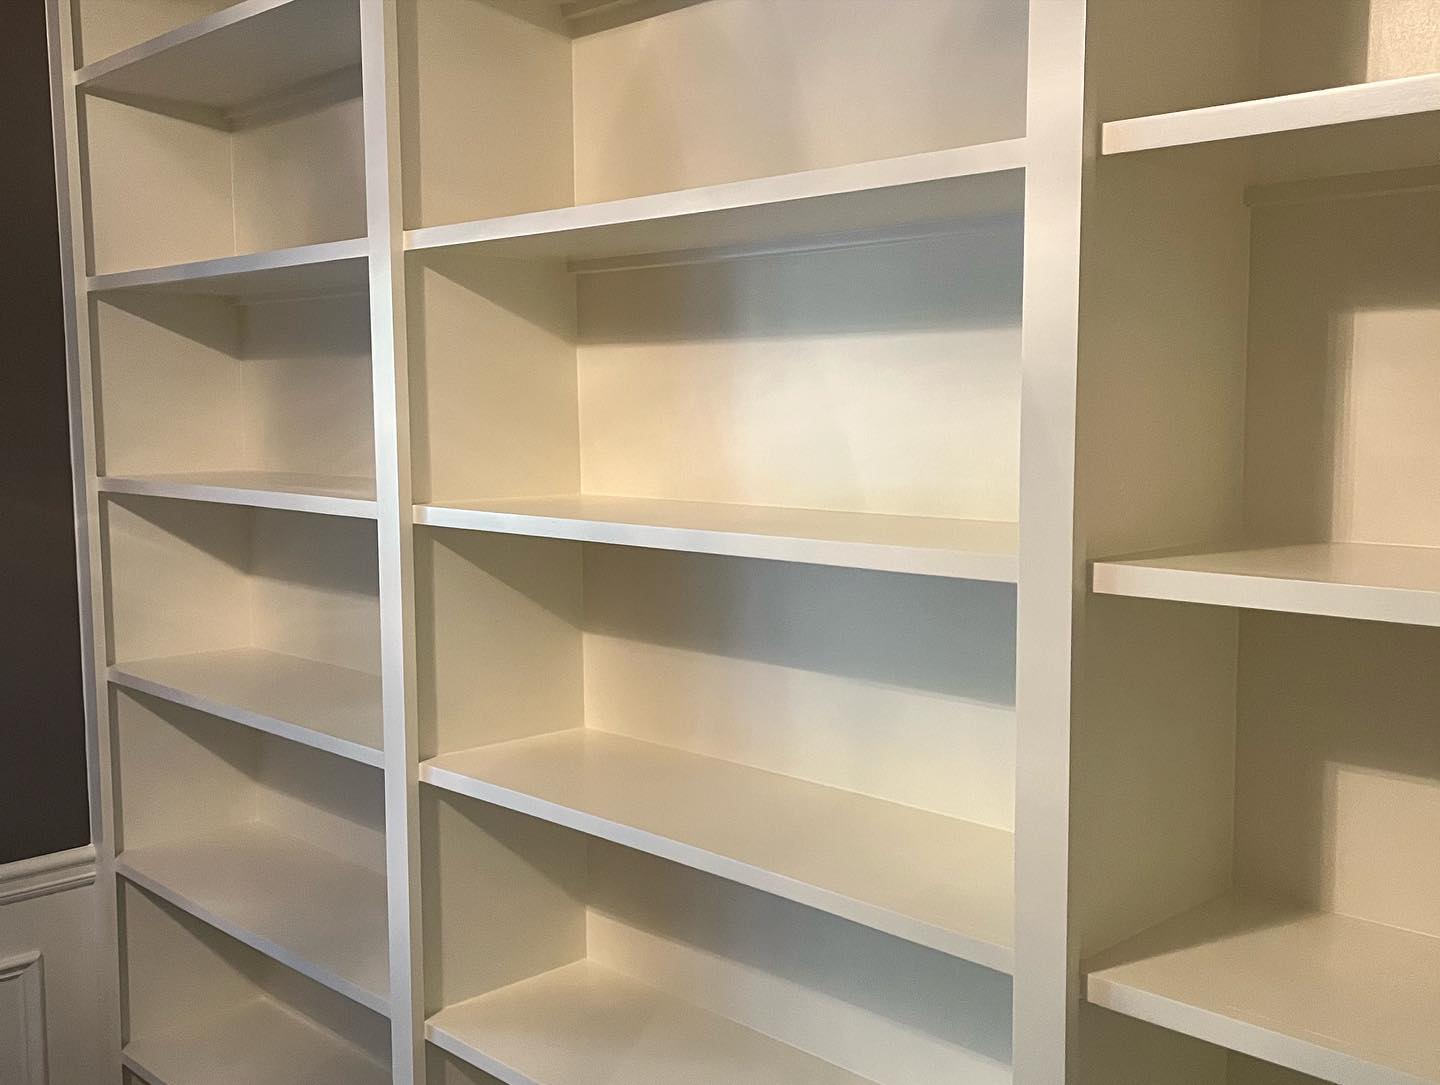 Custom Large Bookshelf Built in Cabinets 2